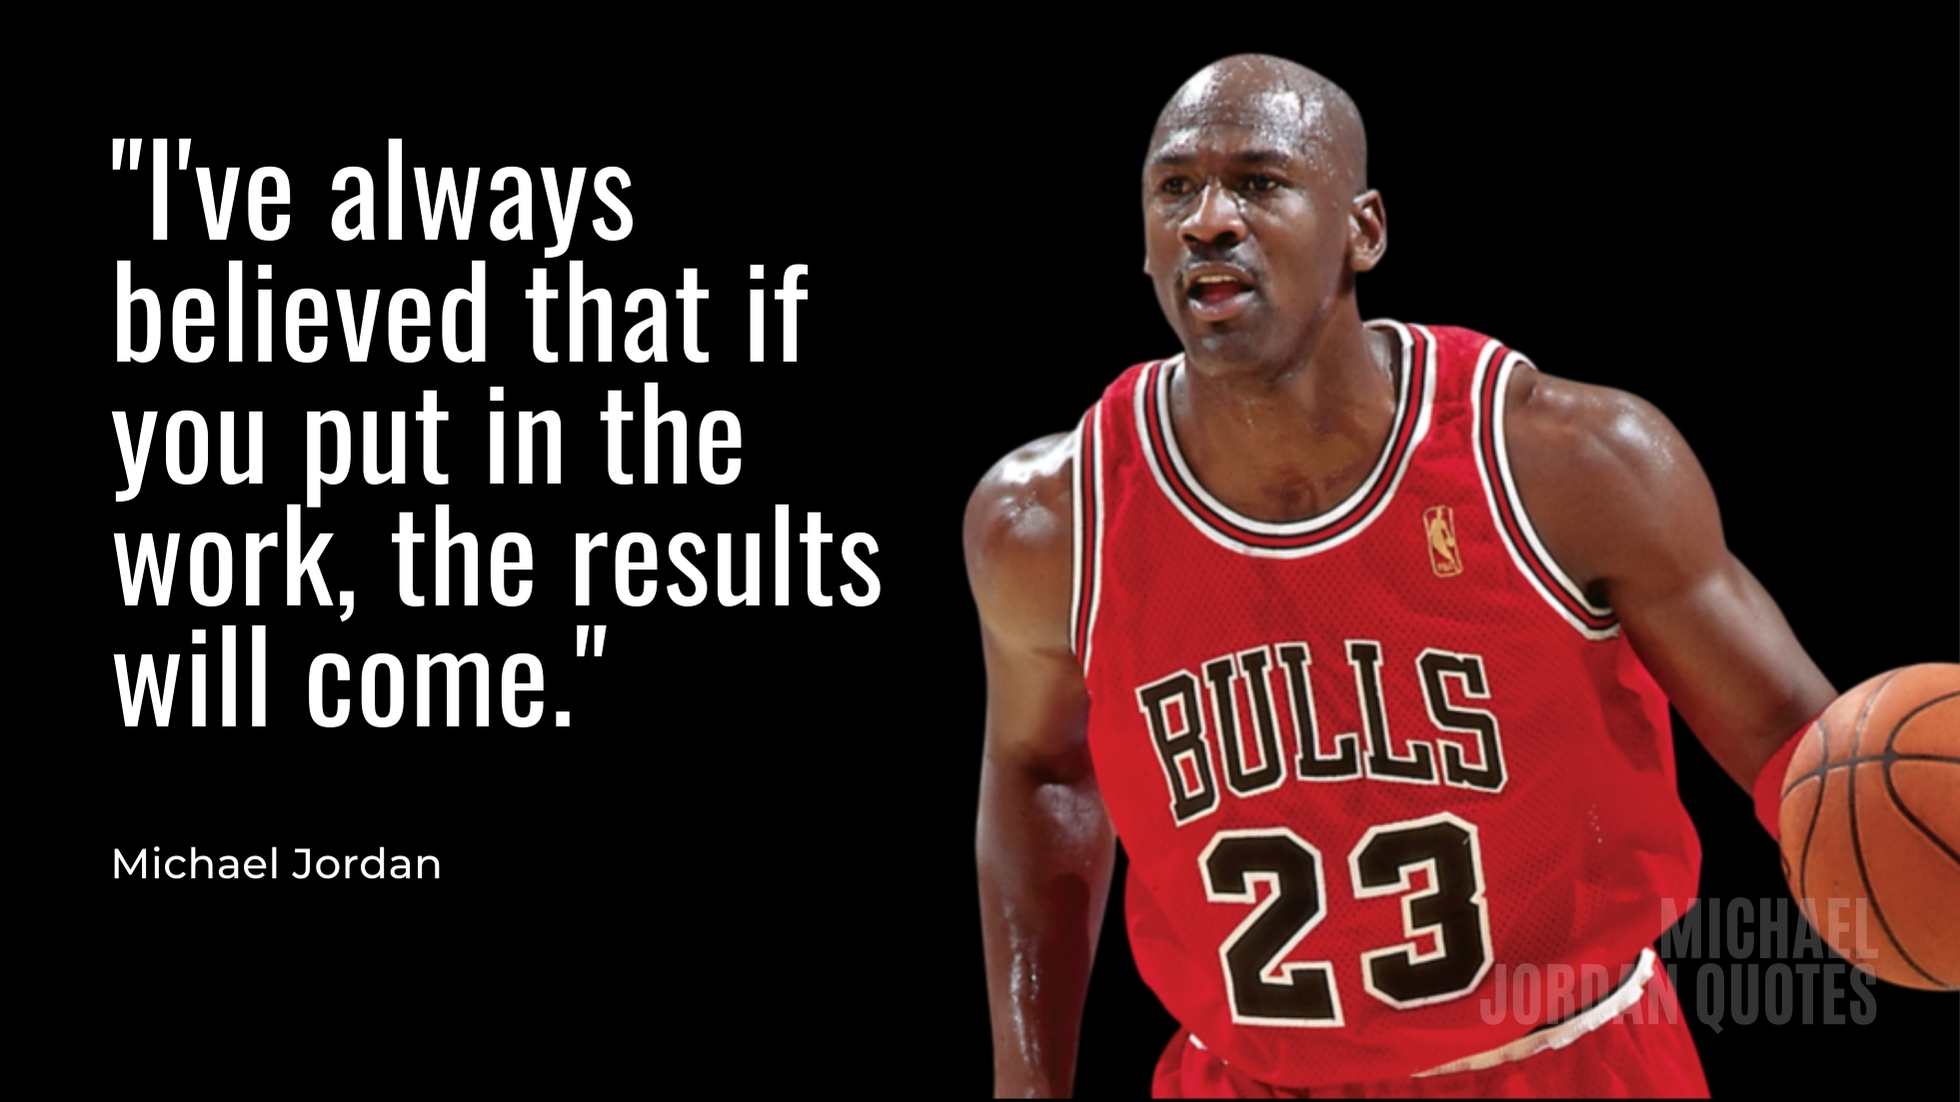 Motivational Michael Jordan Quotes